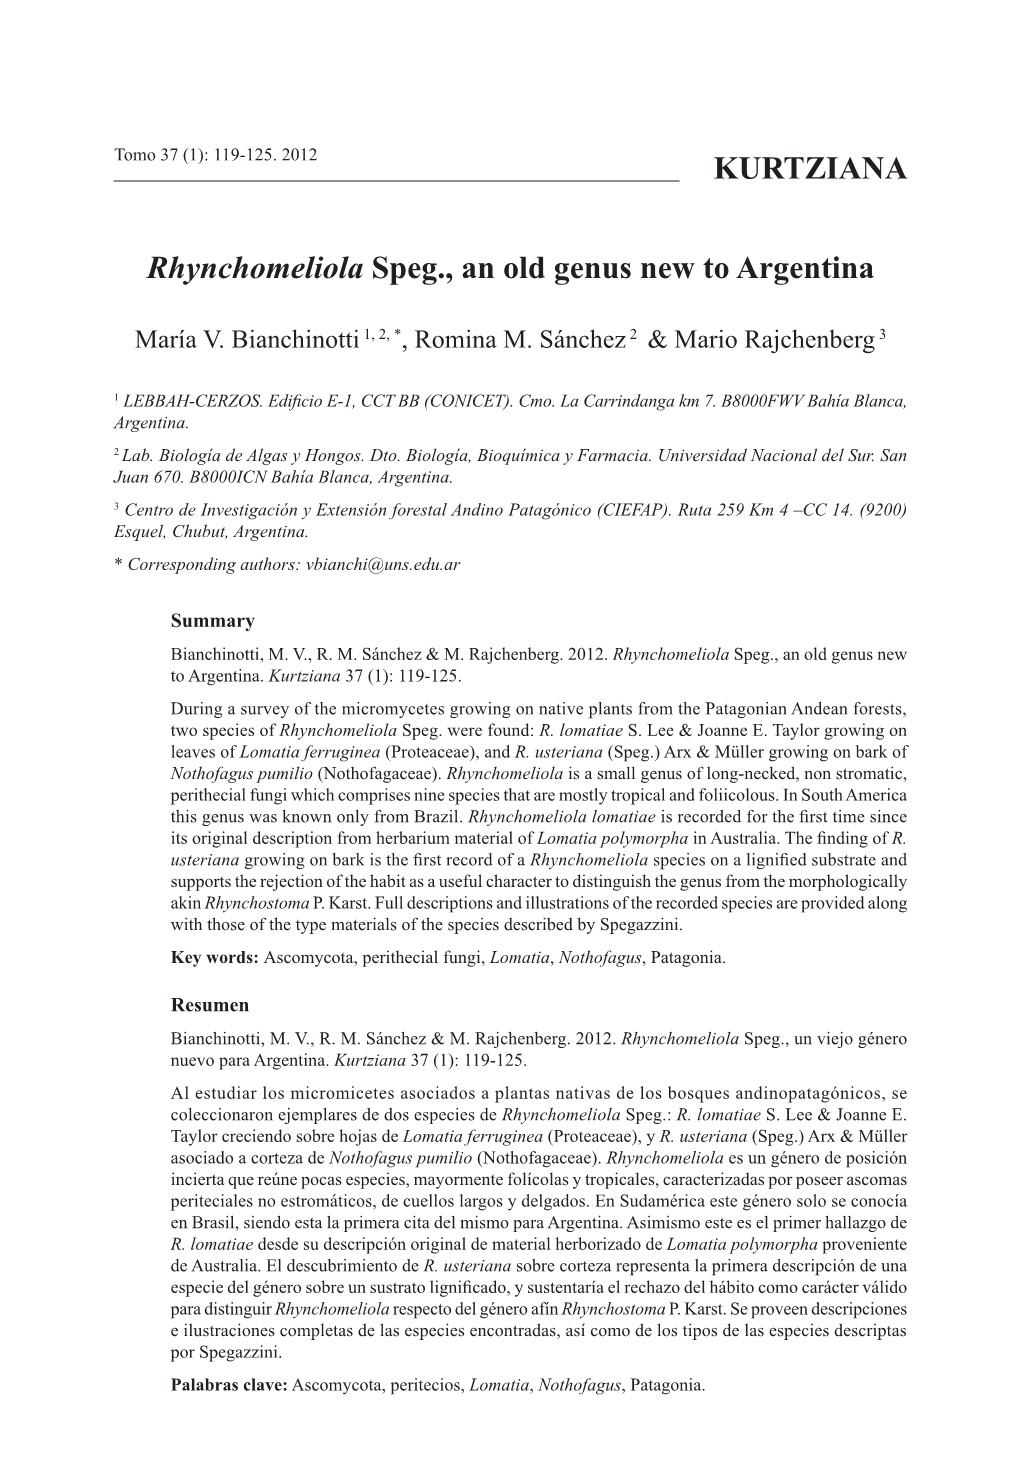 KURTZIANA Rhynchomeliola Speg., an Old Genus New to Argentina